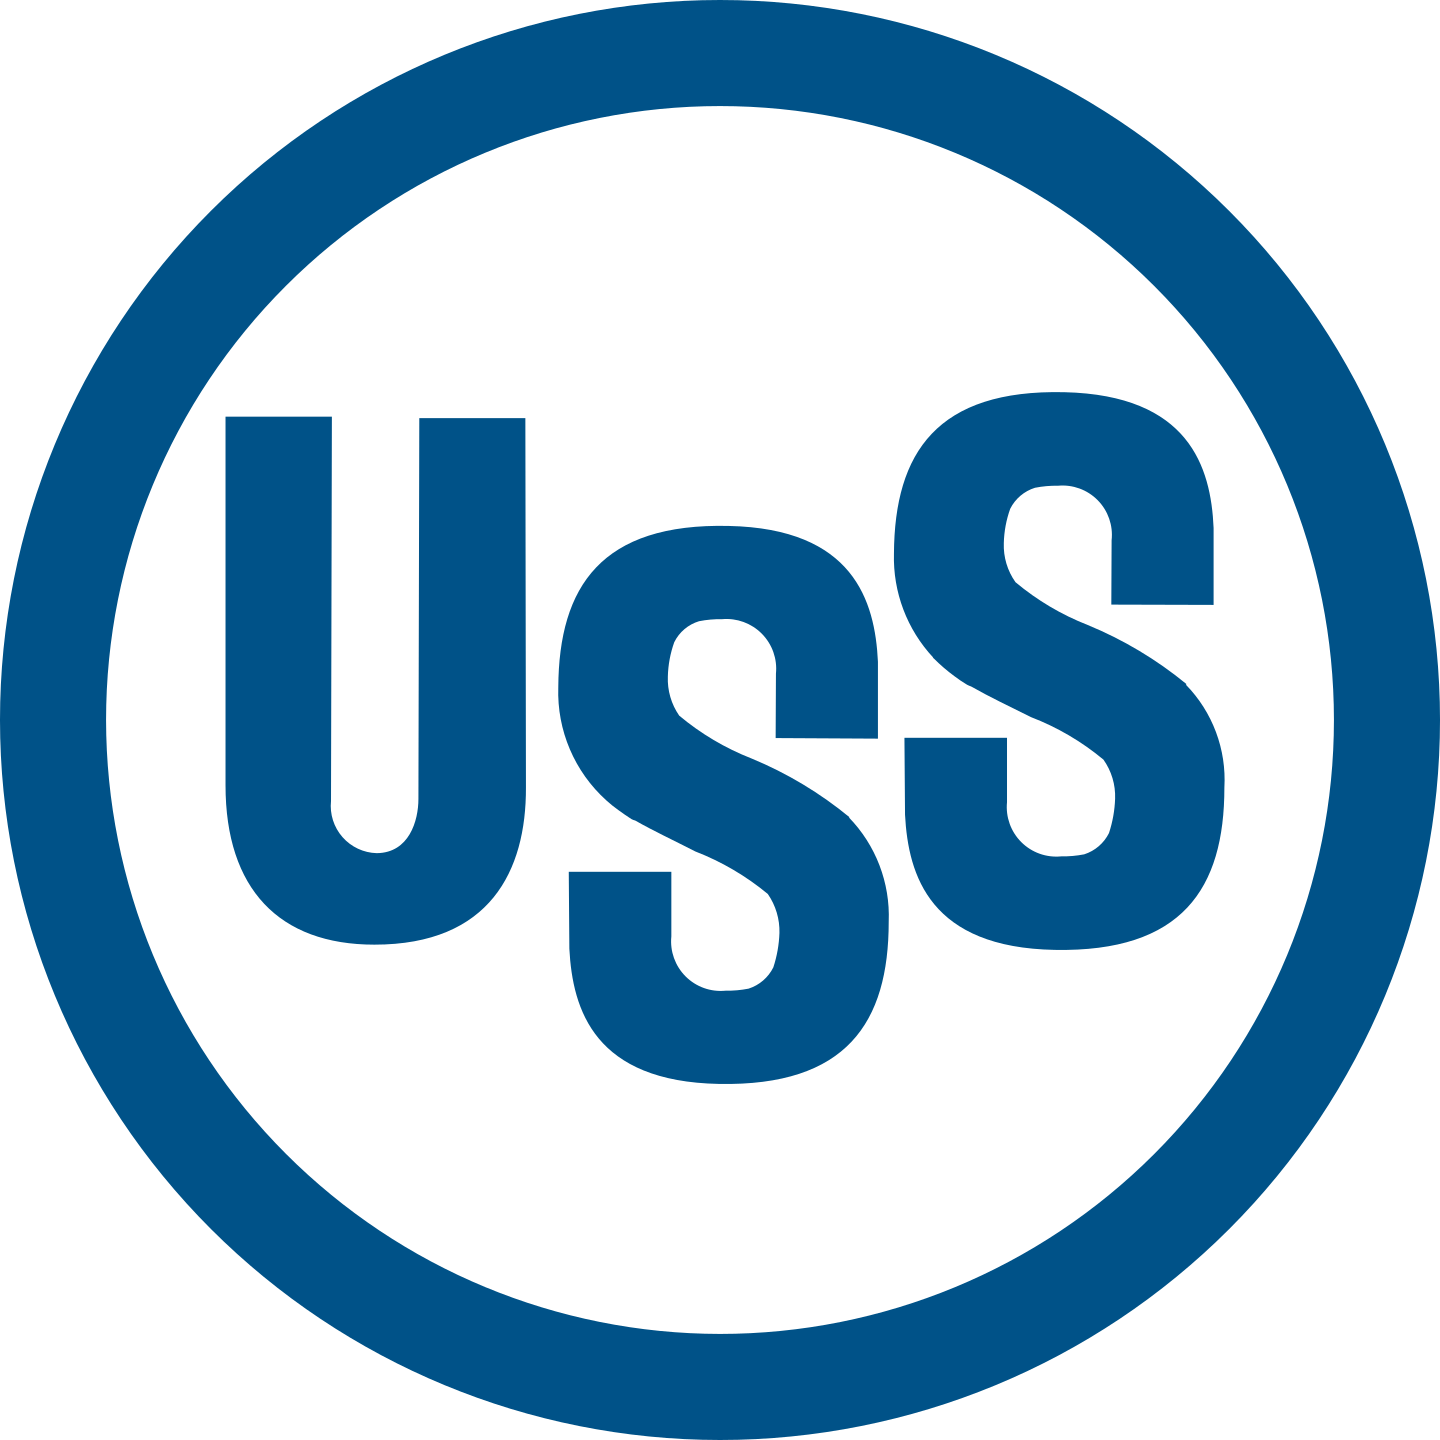 USS Logo - United States Steel Logo.